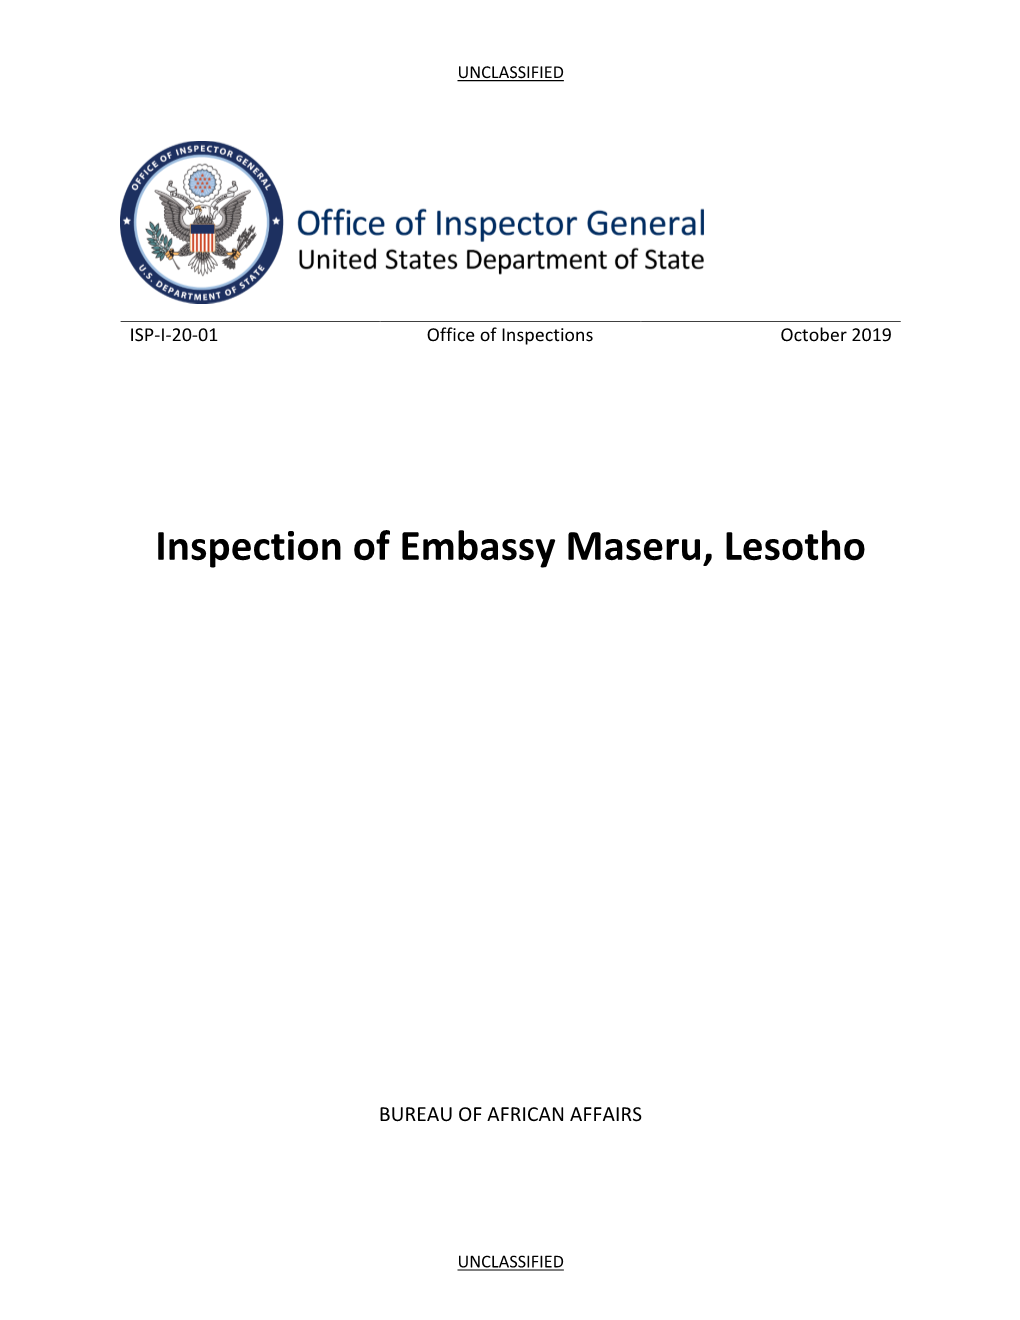 Inspection of Embassy Maseru, Lesotho